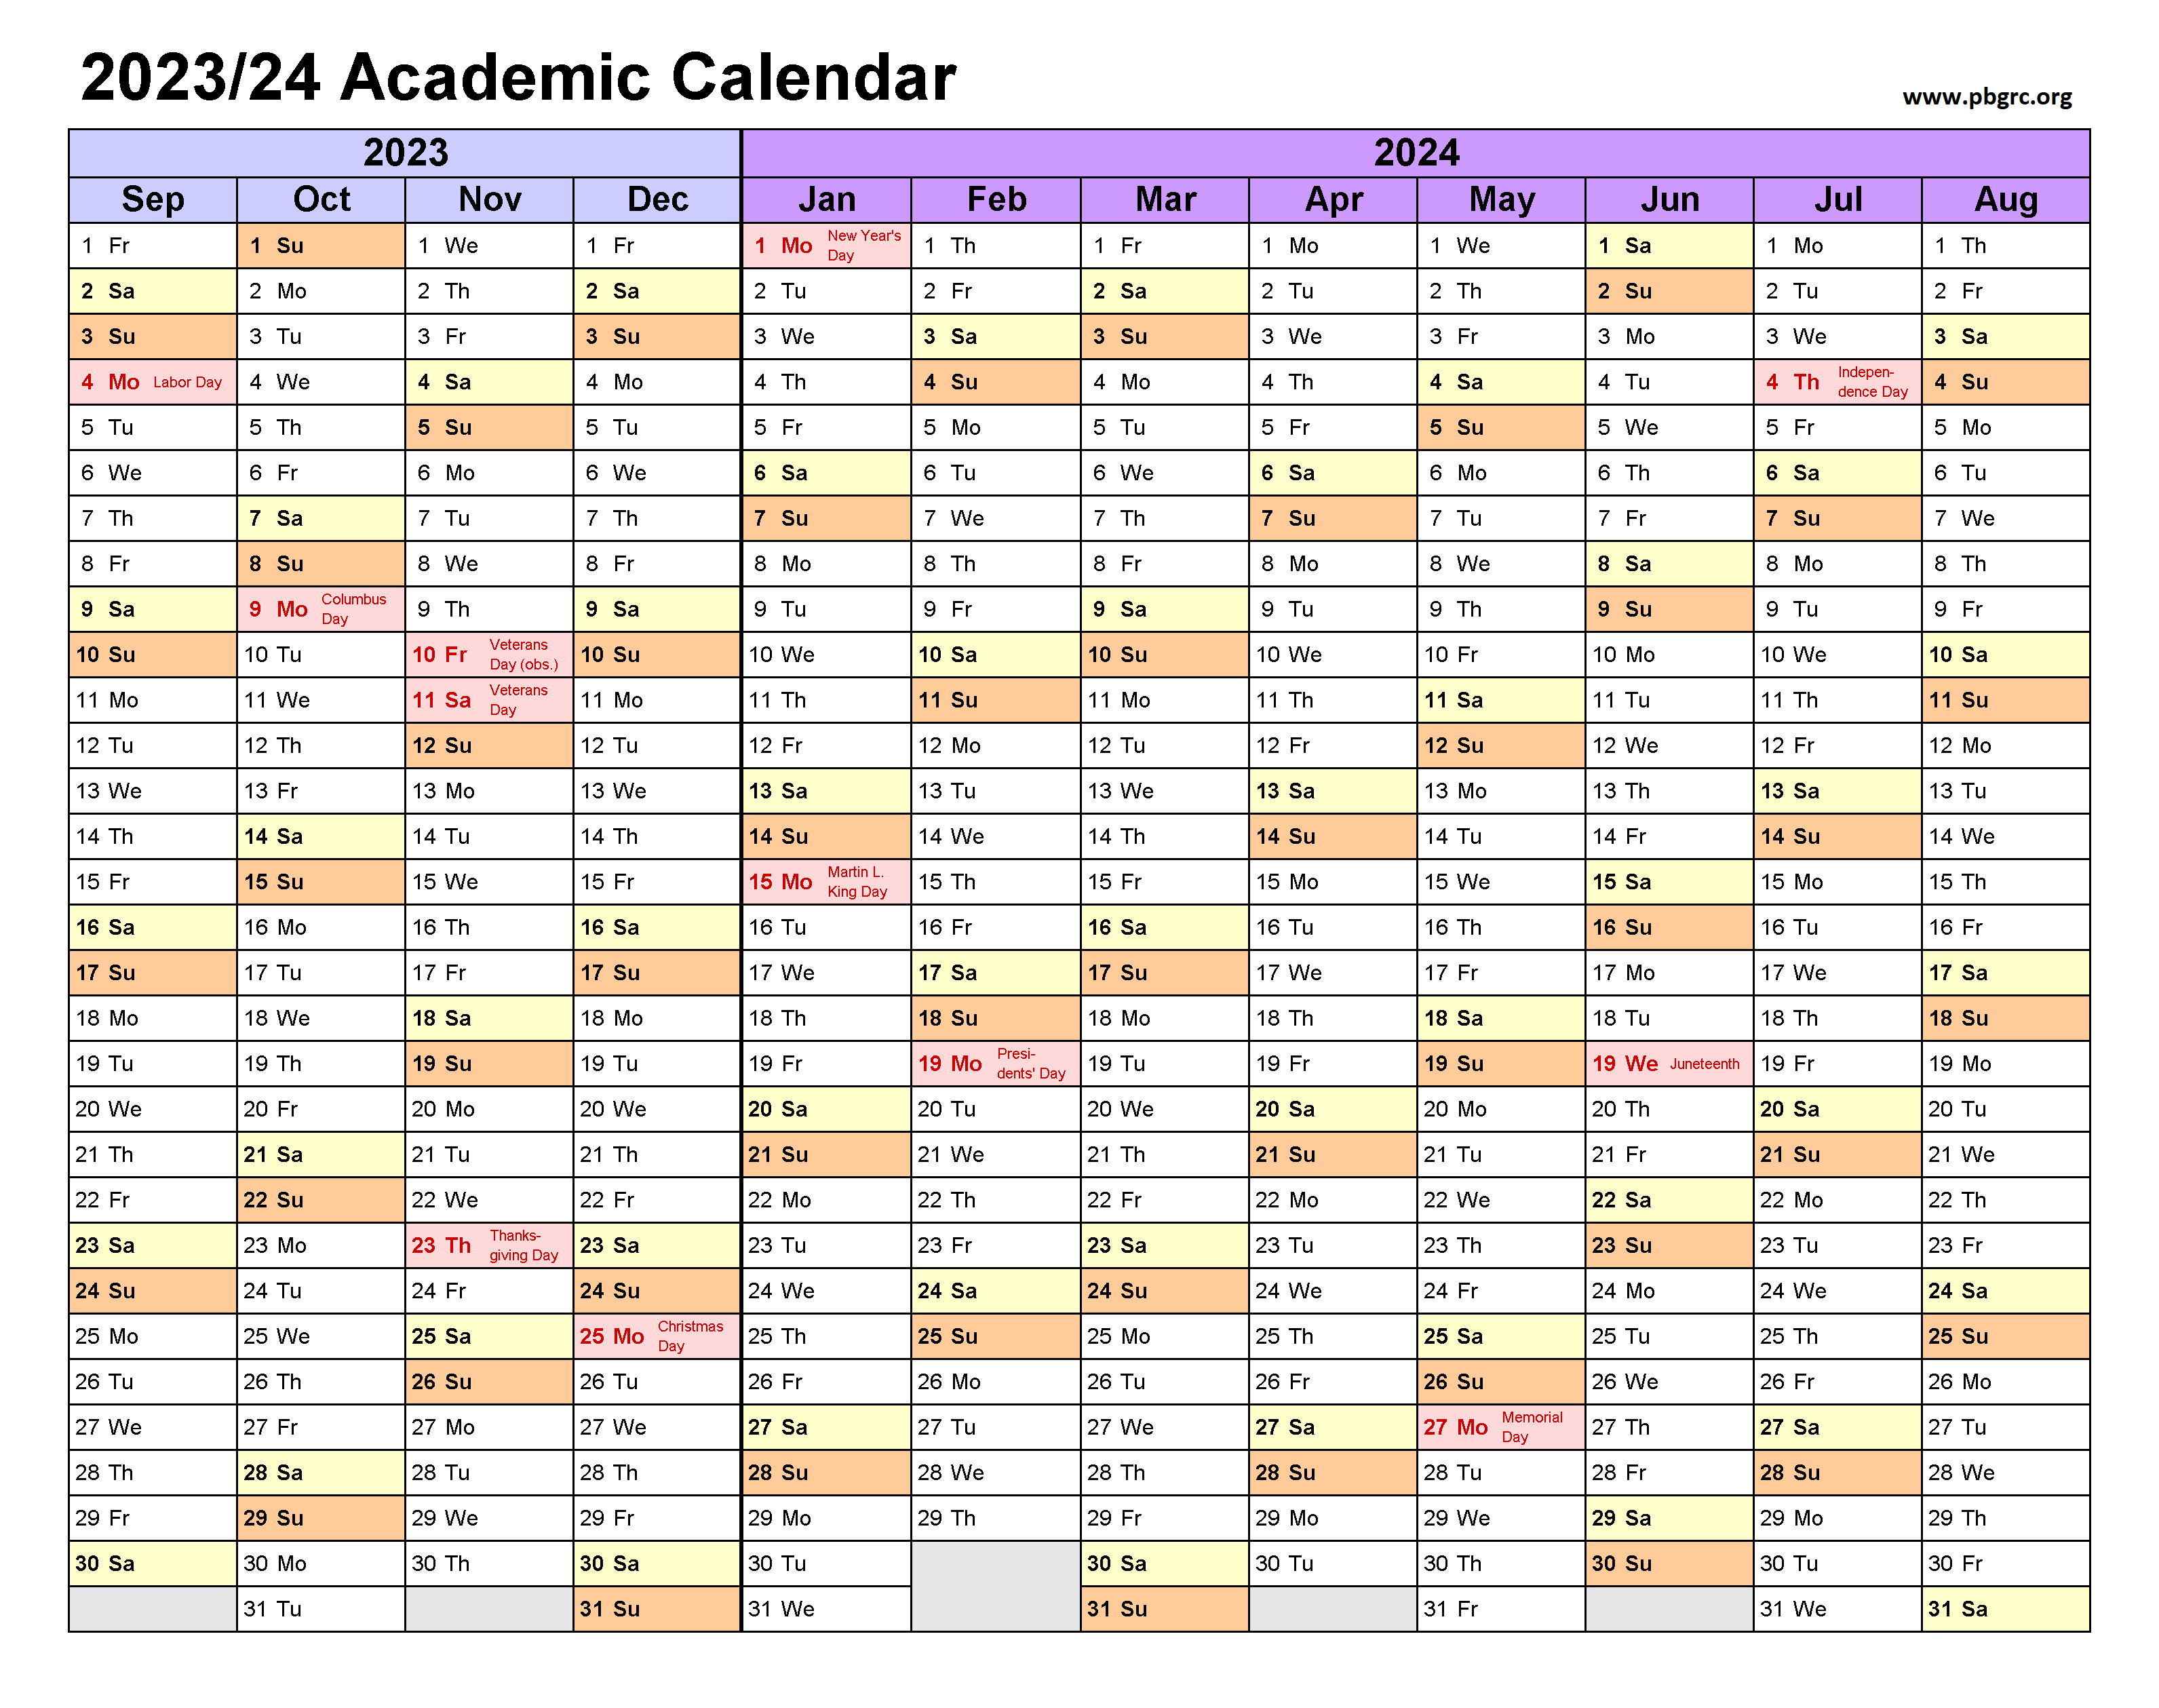 Academic Calendar 2023 to 2024